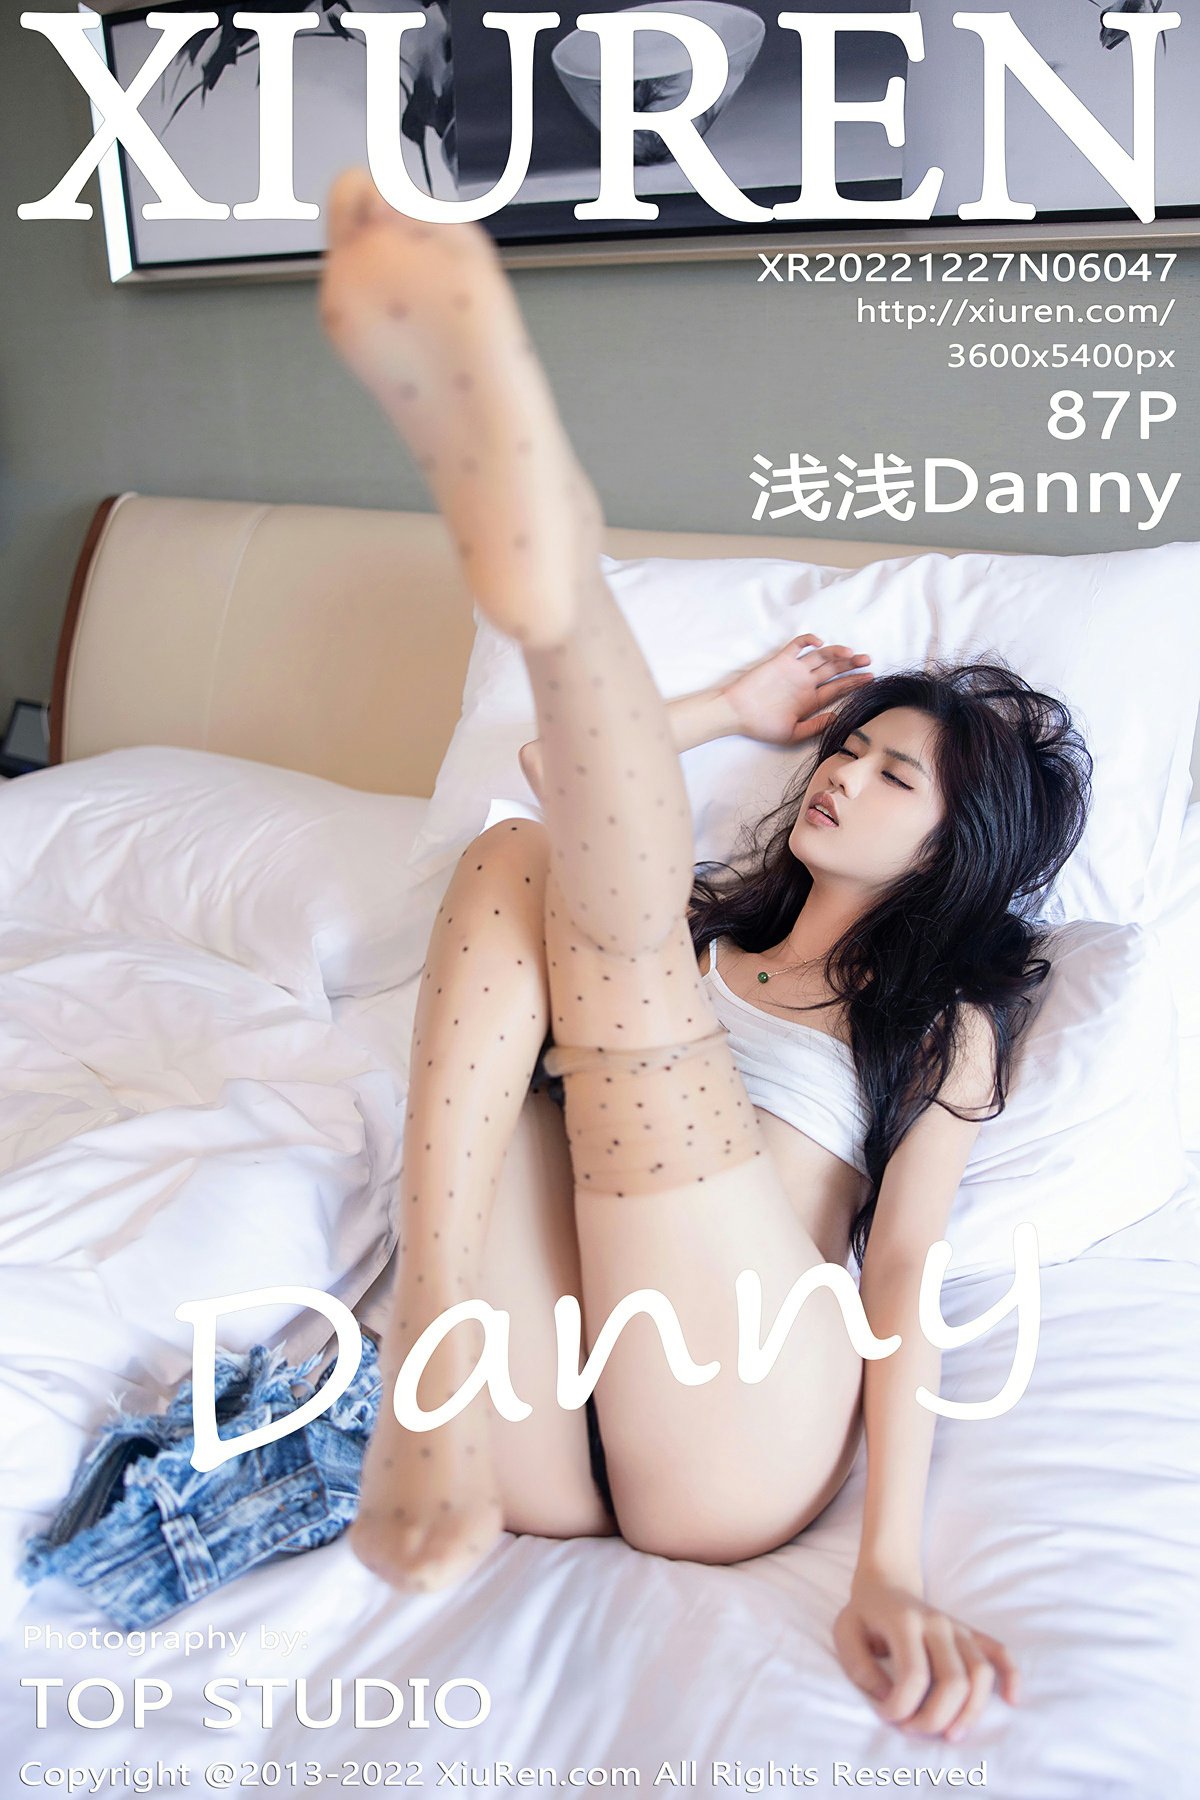 [XiuRen秀人网] No.6047 浅浅Danny1 